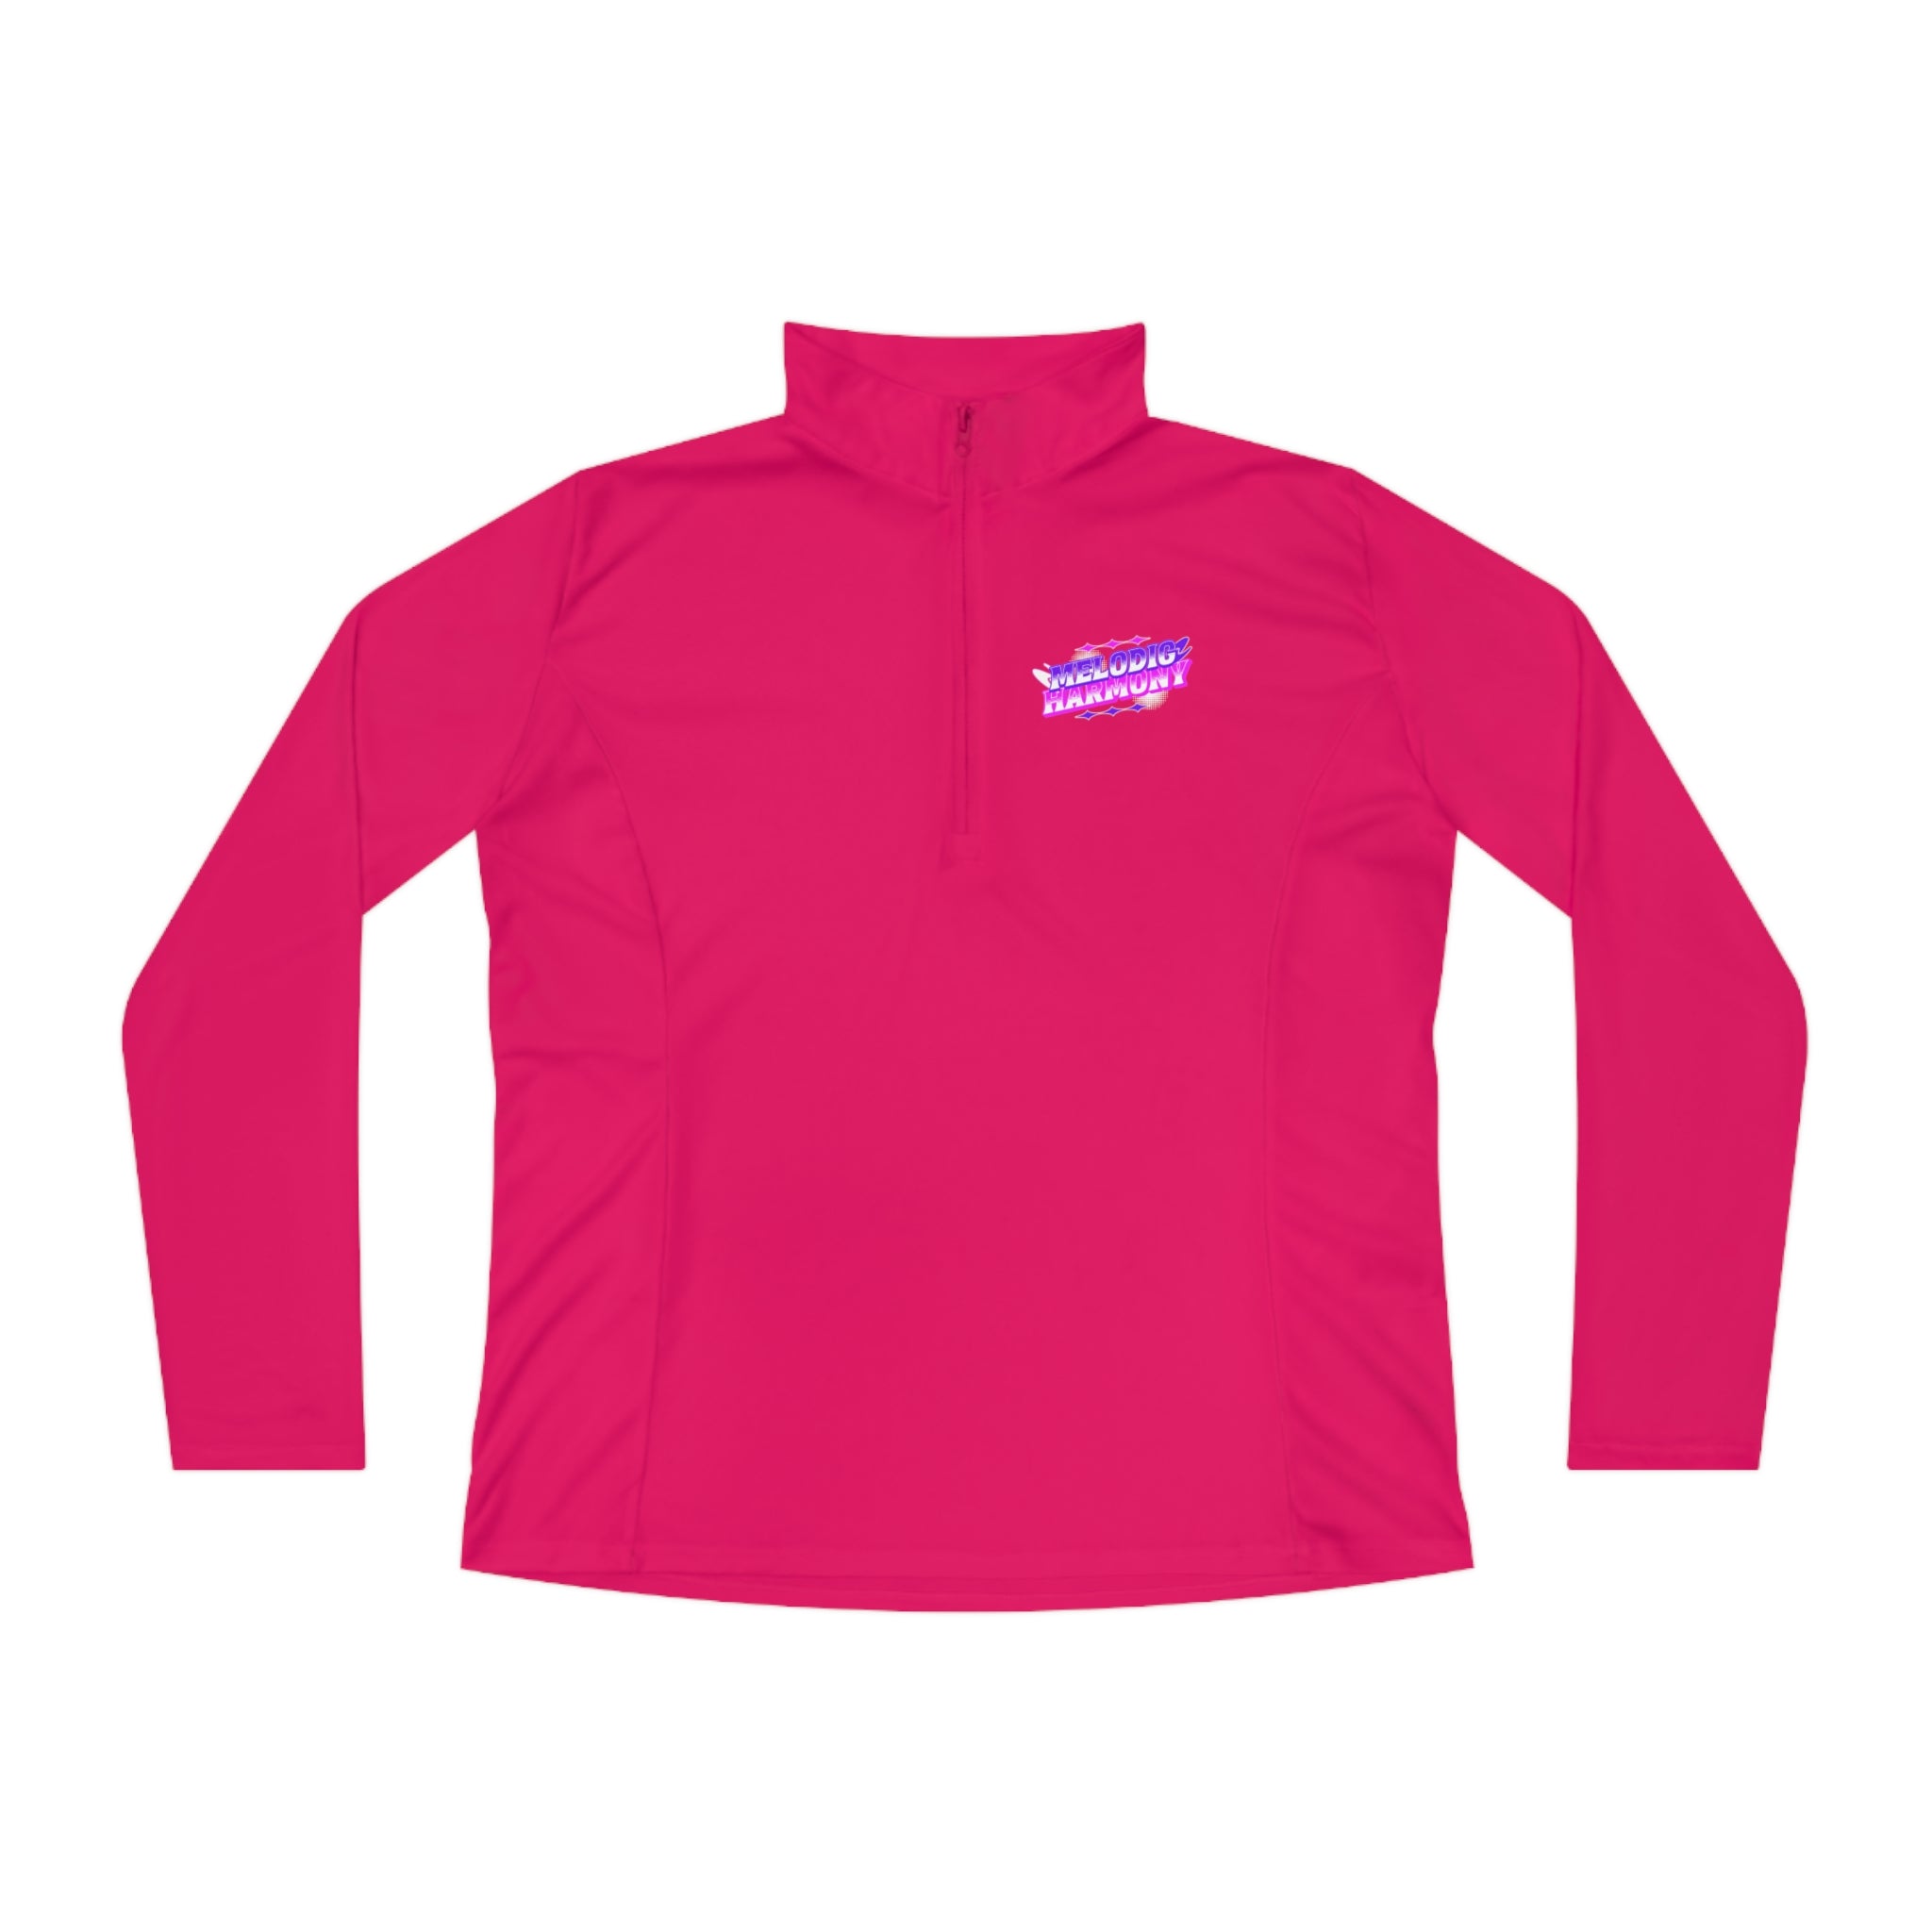 SORTYGO - Melodic Harmony Women Quarter Zip Pullover in Pink Raspberry S